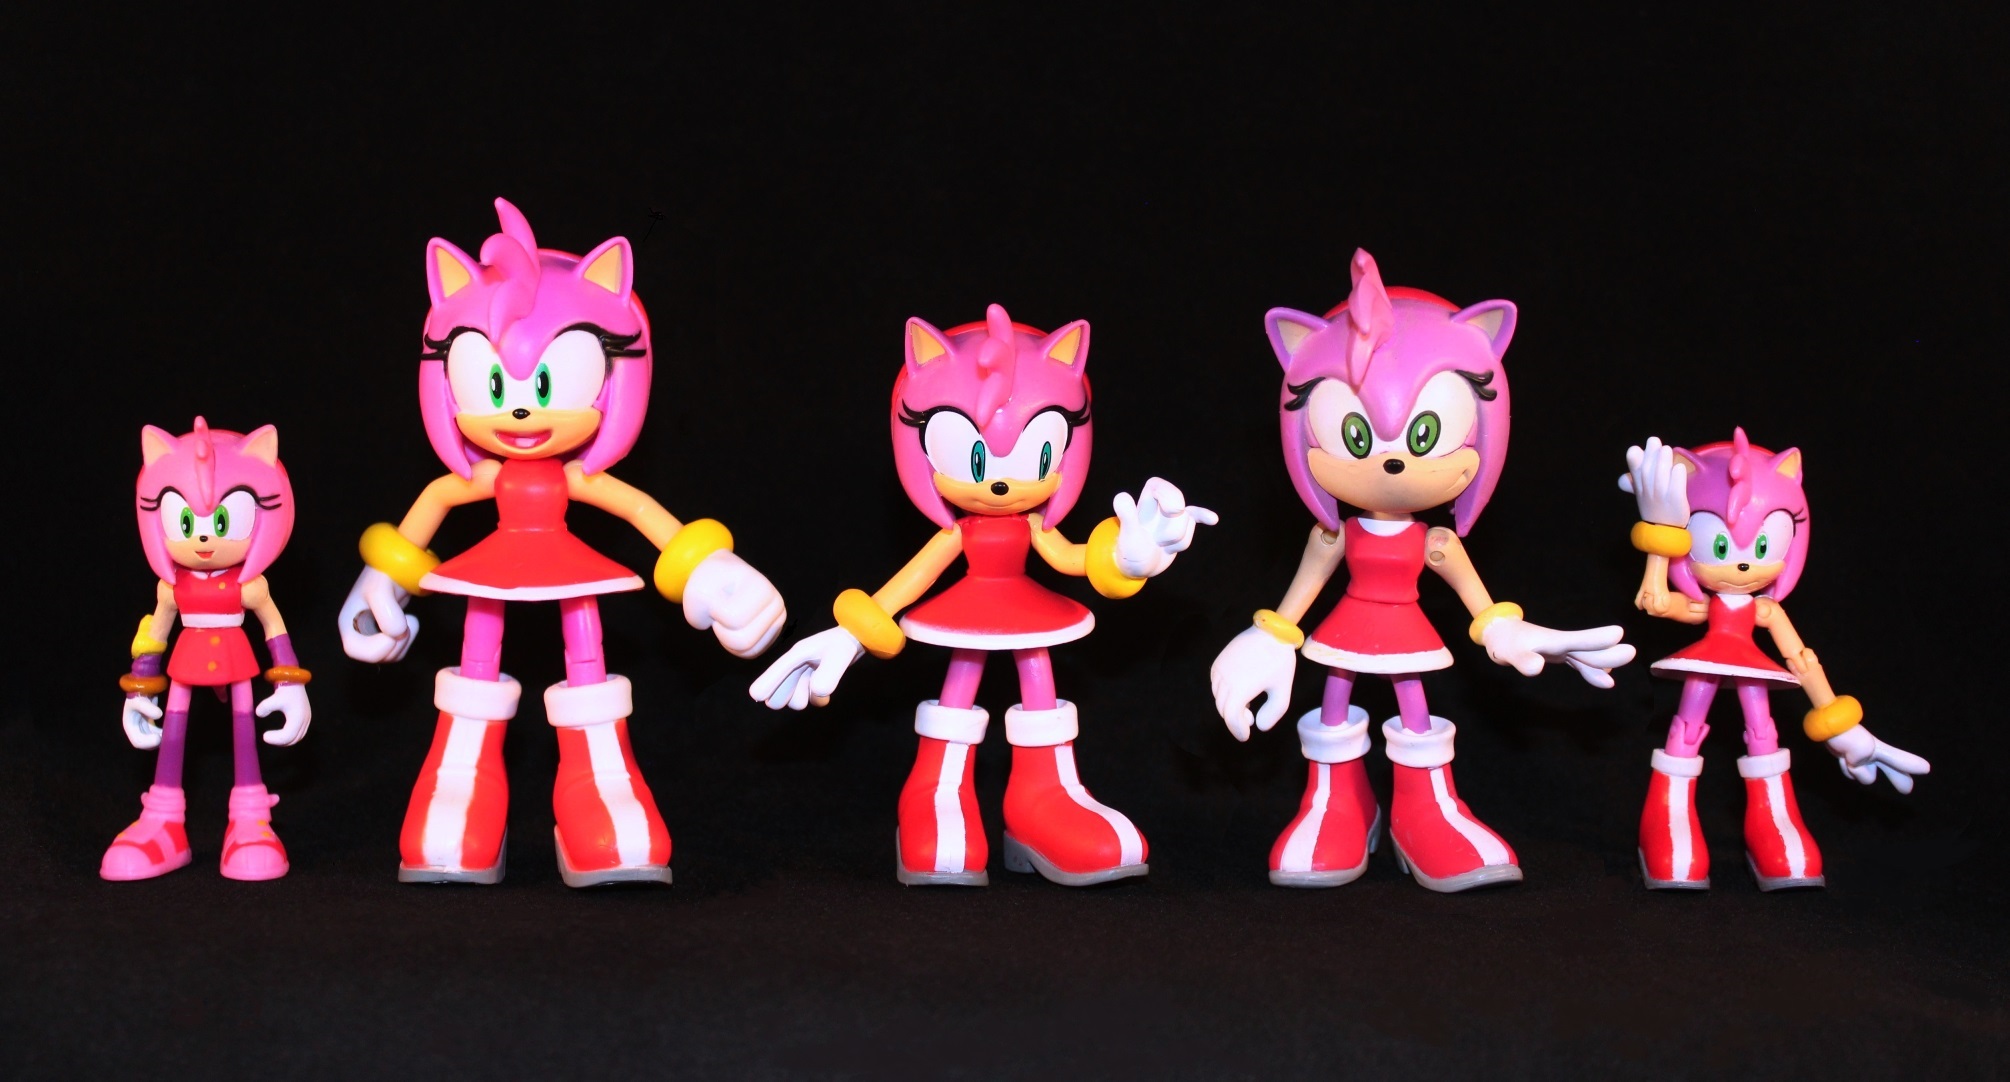 She's Fantastic: Sonic - AMY ROSE!